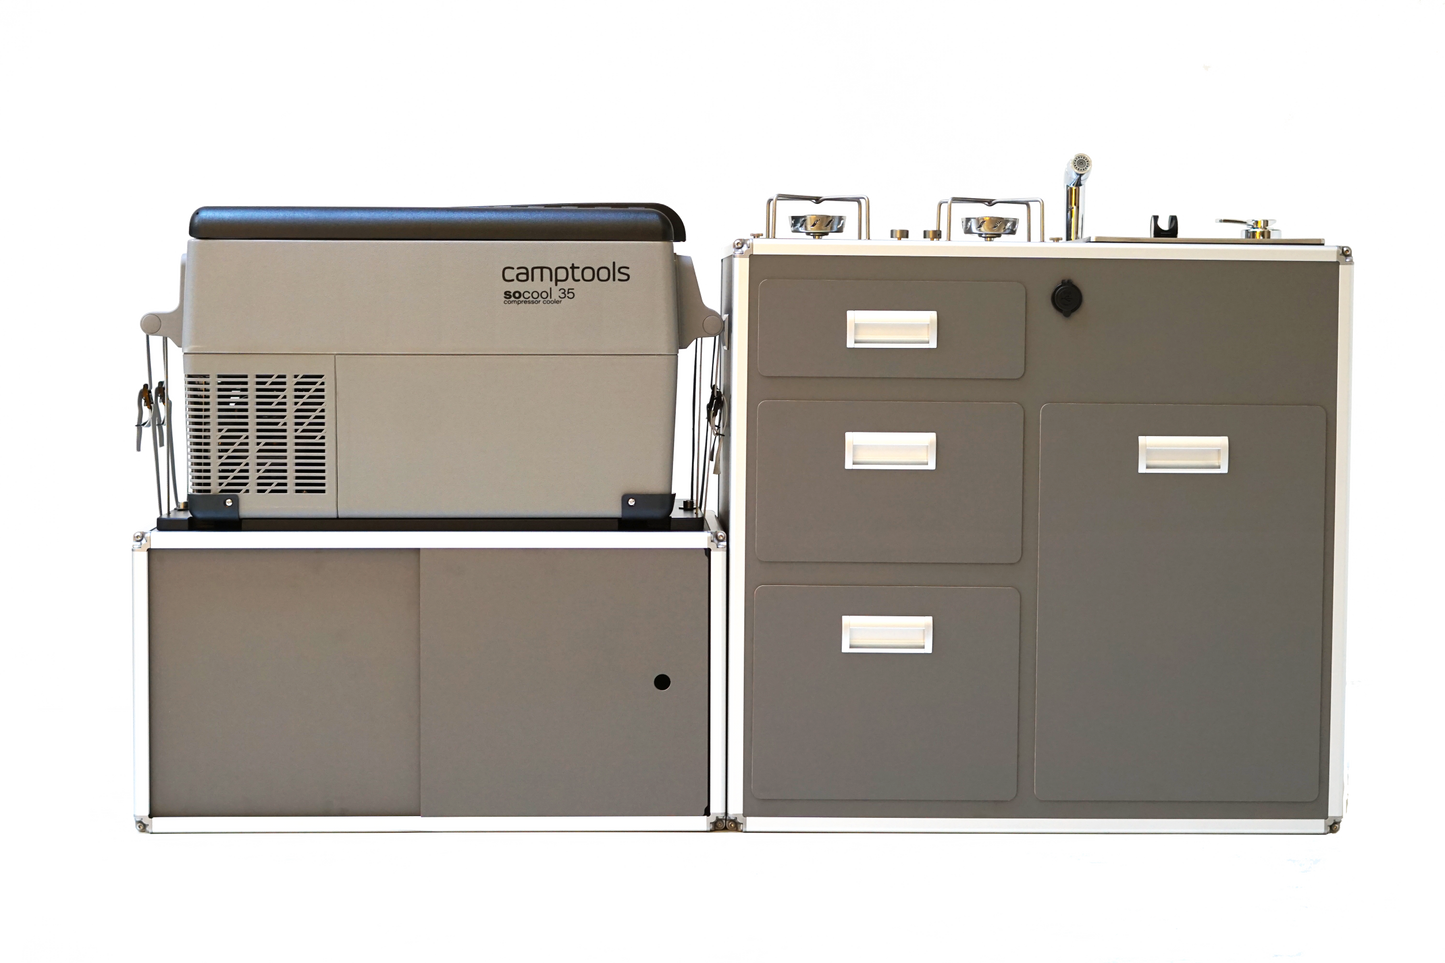 Cooling box base cabinet / cooling box module